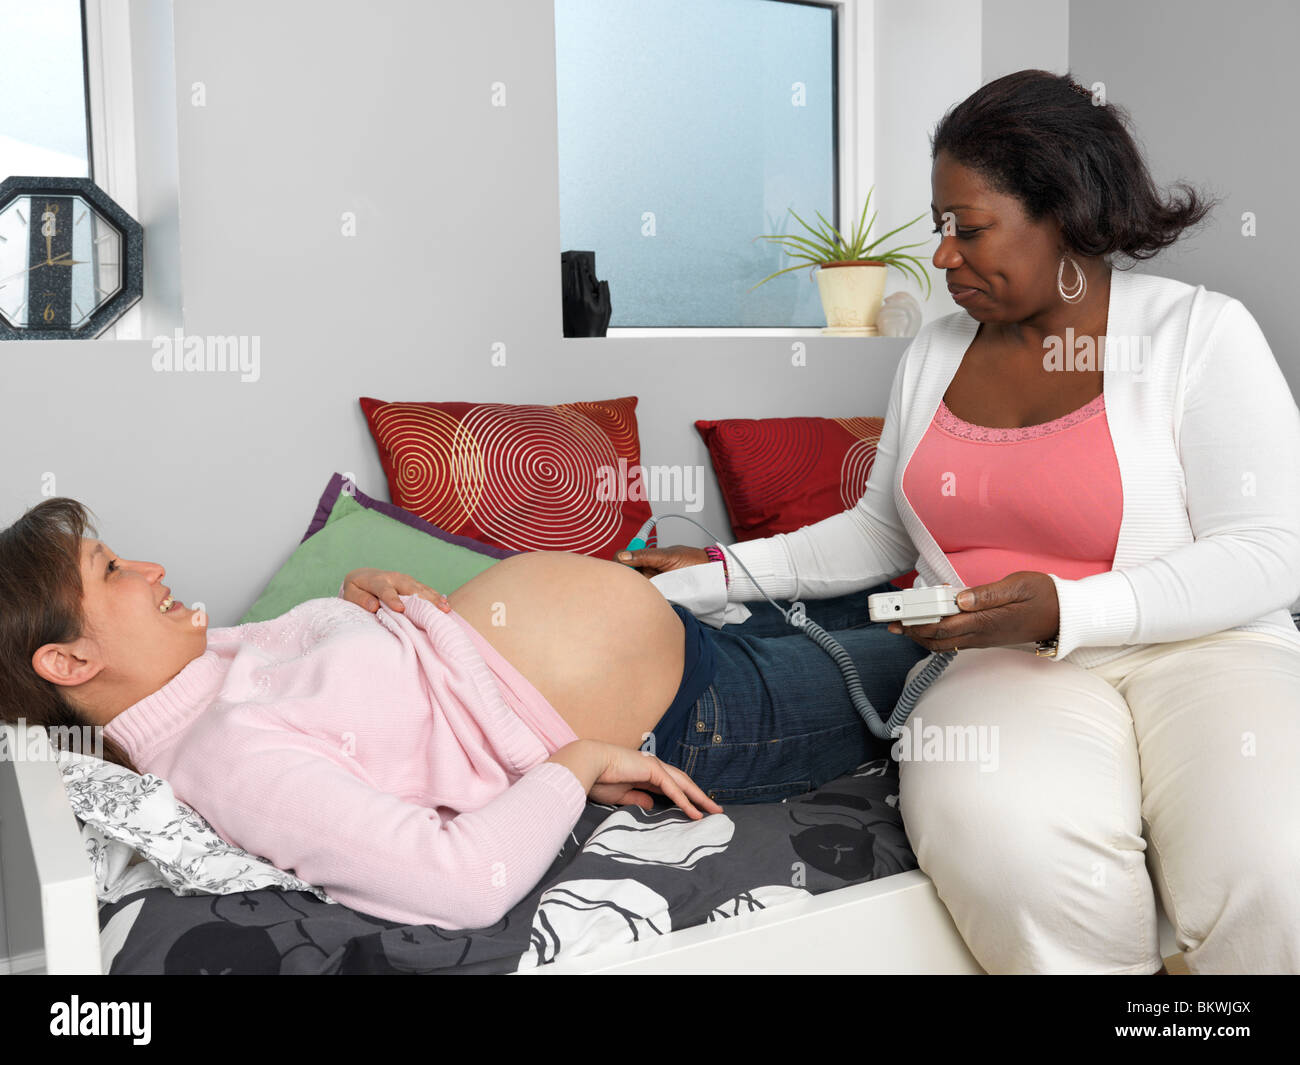 Monitor fetal doppler fotografías e imágenes de alta resolución - Alamy